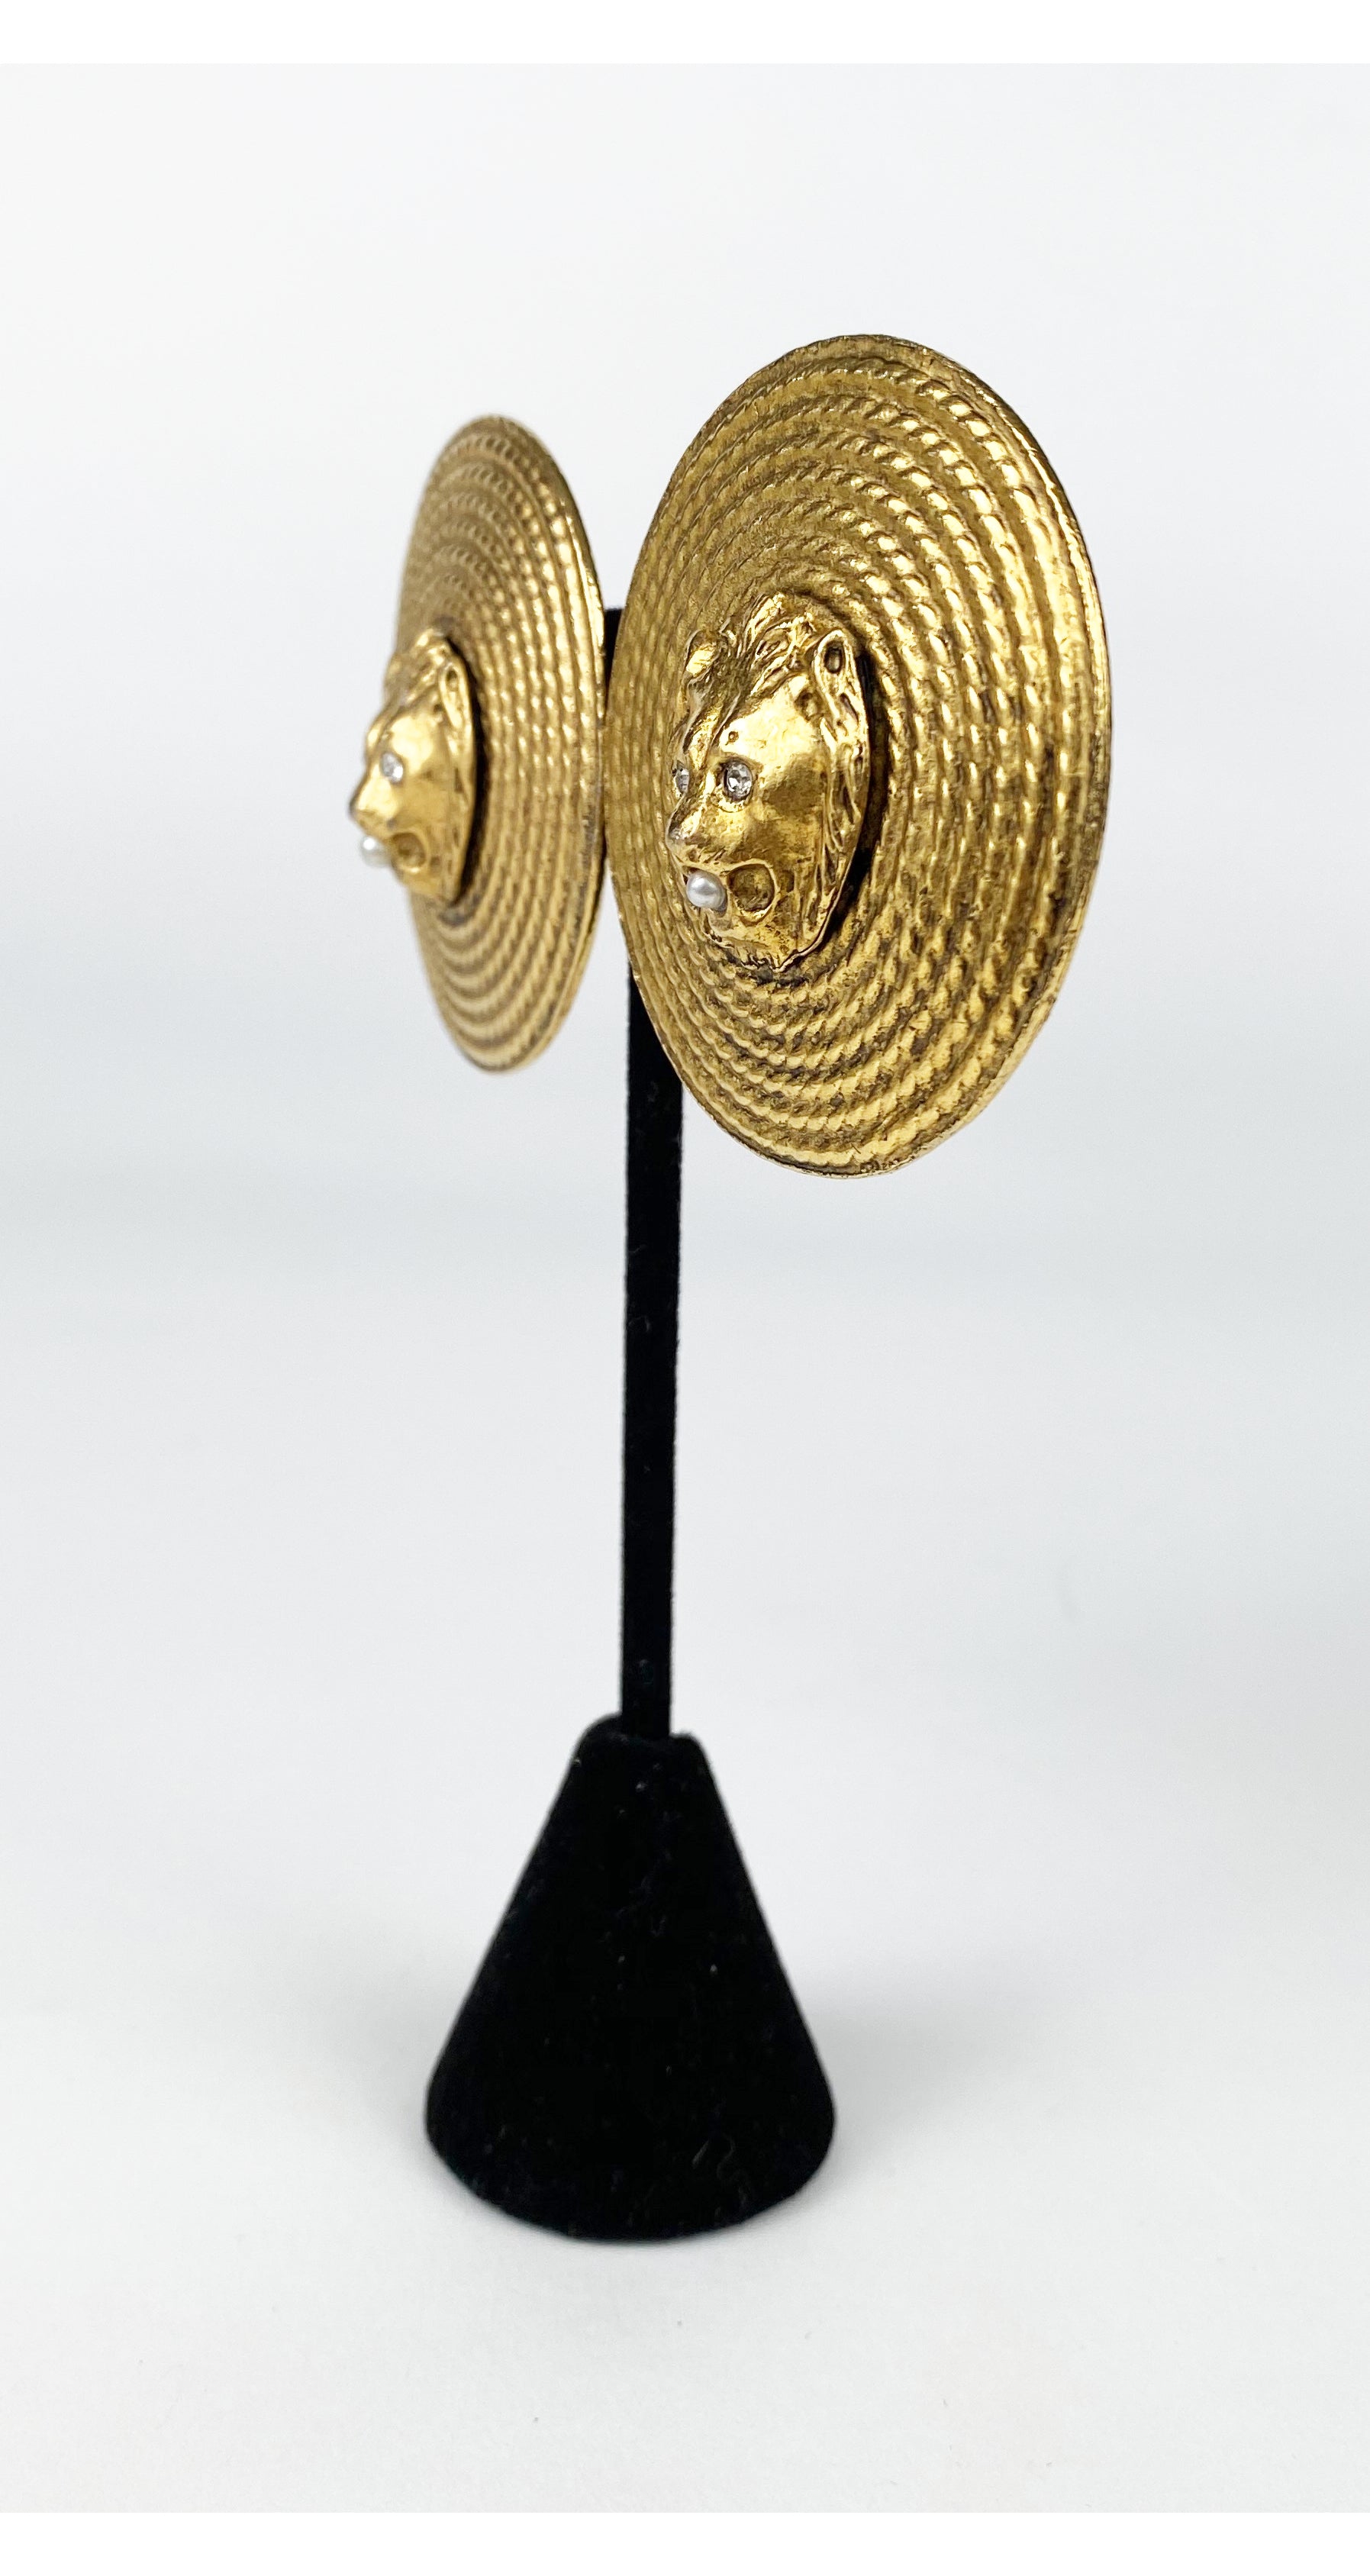 1980s Lion Head Medallion Gold-Tone Clip-On Earrings